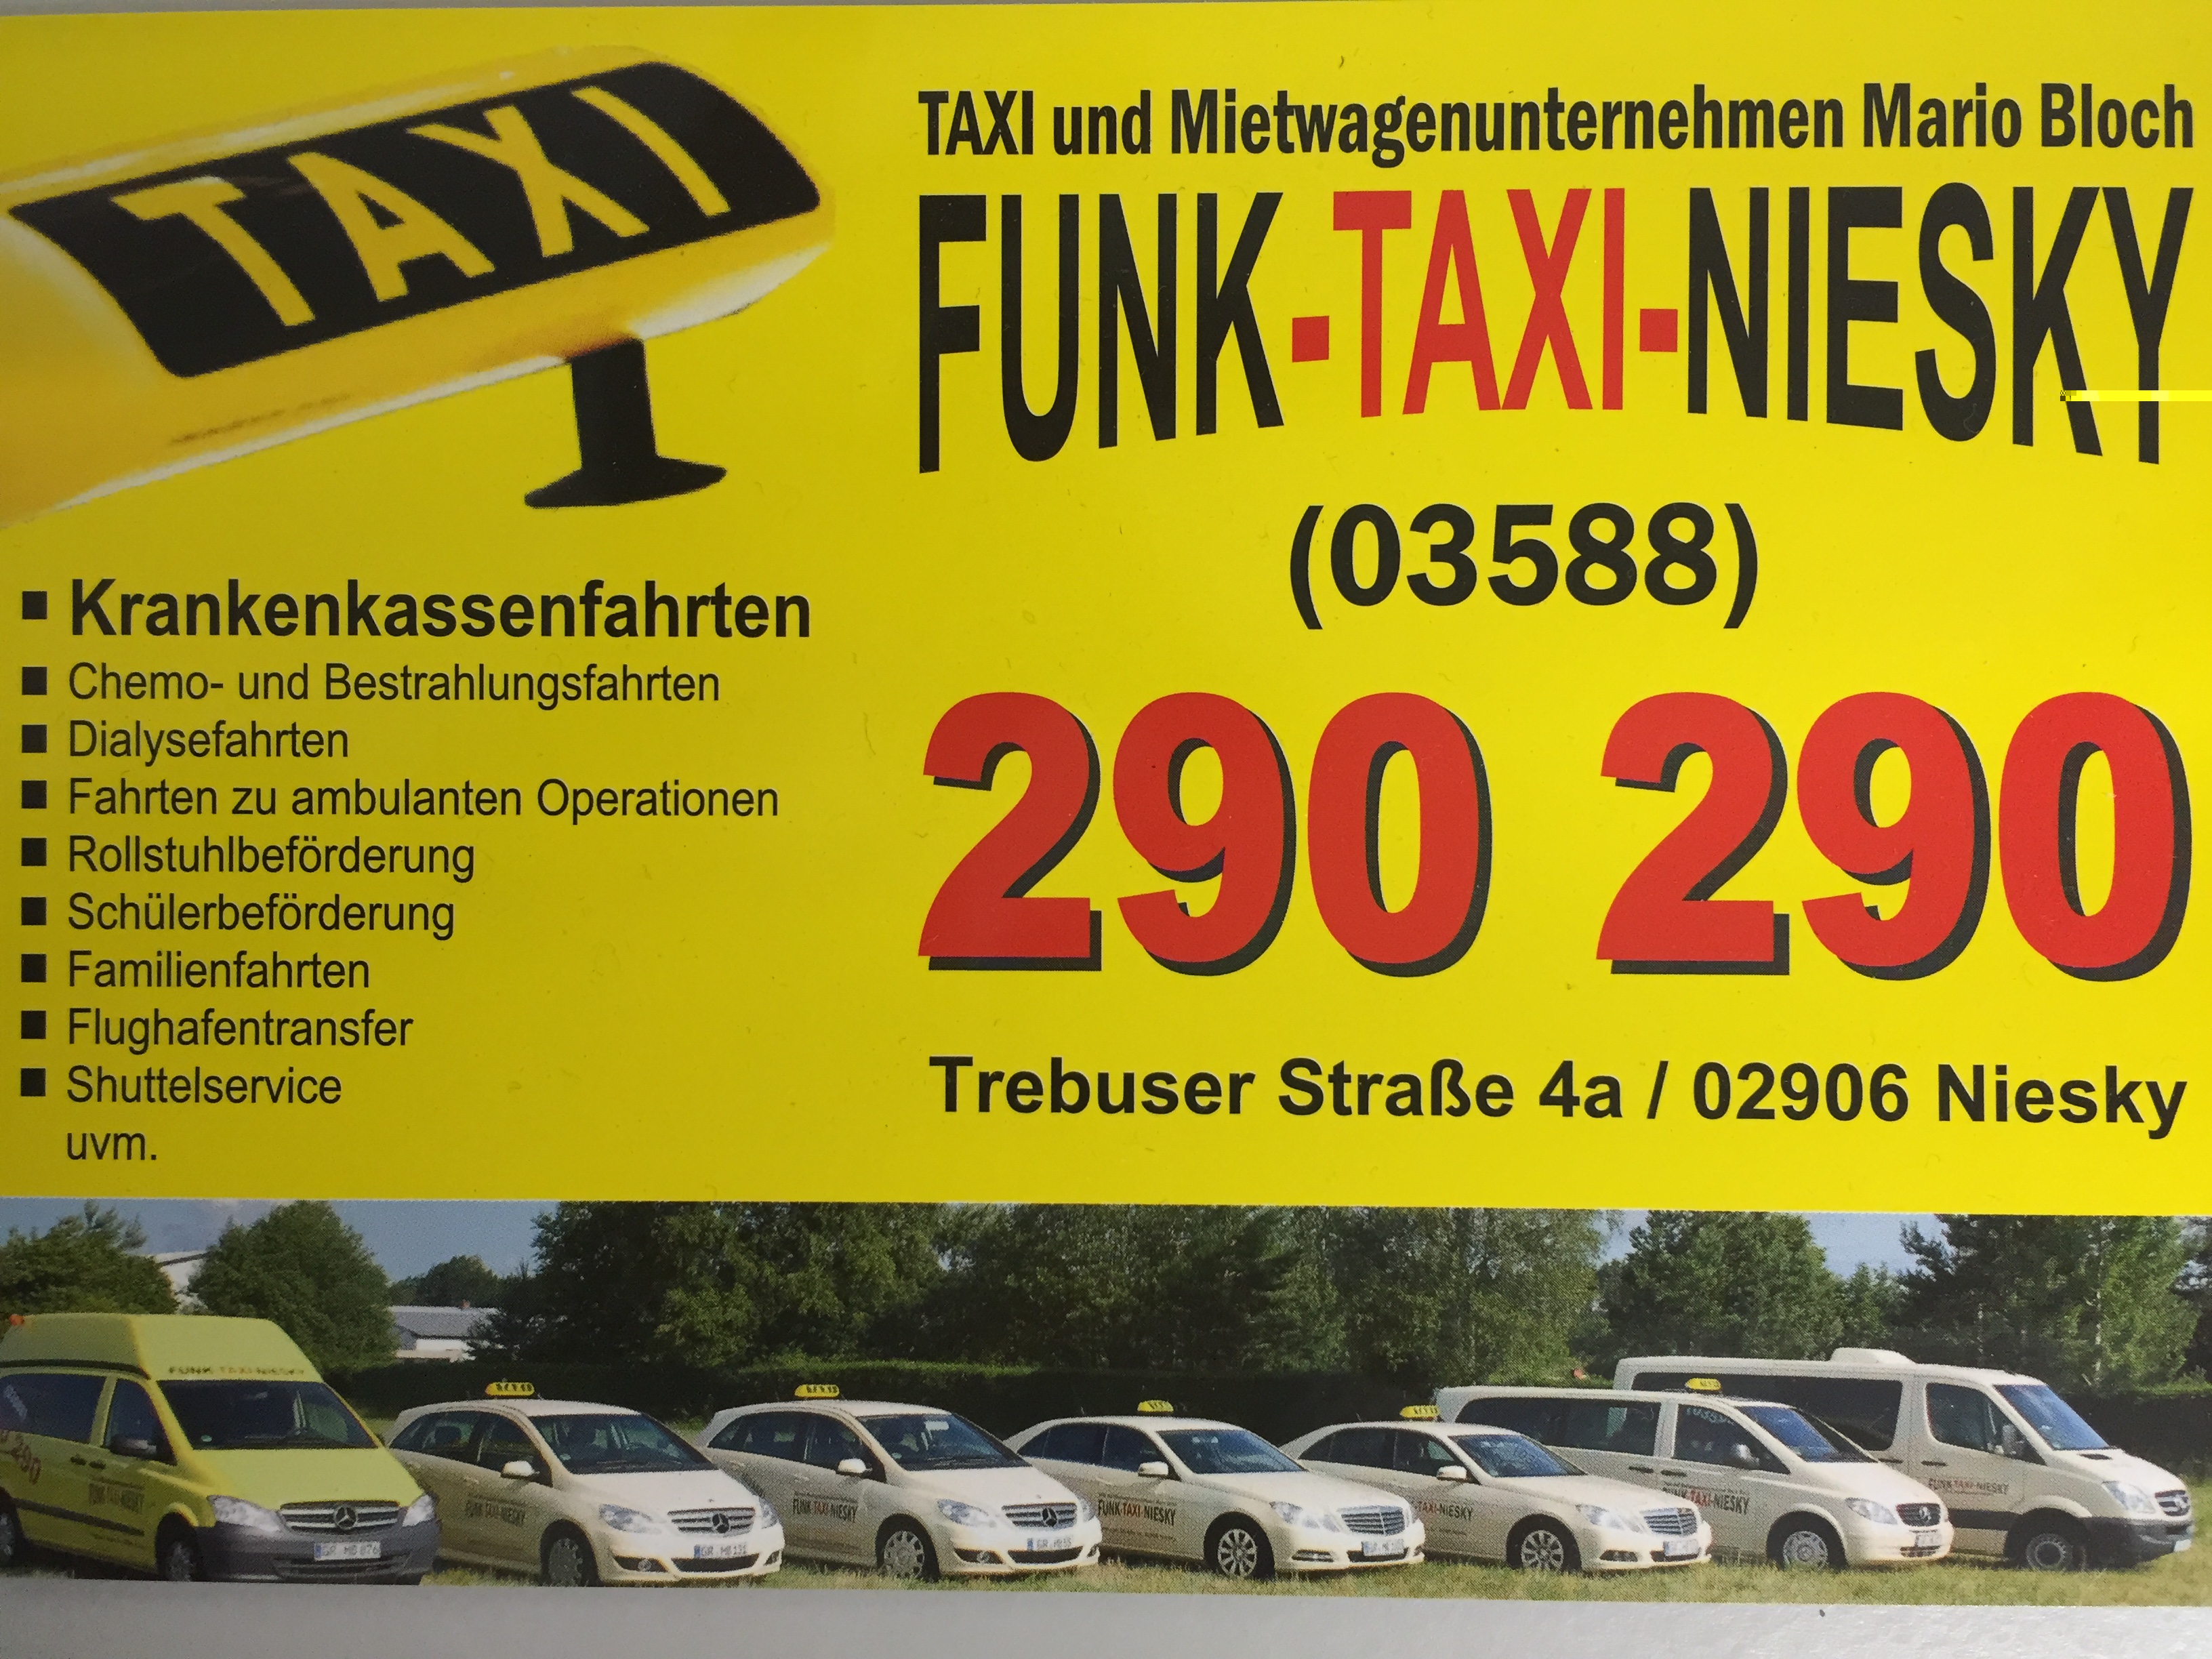 (c) Funk-taxi-niesky.de